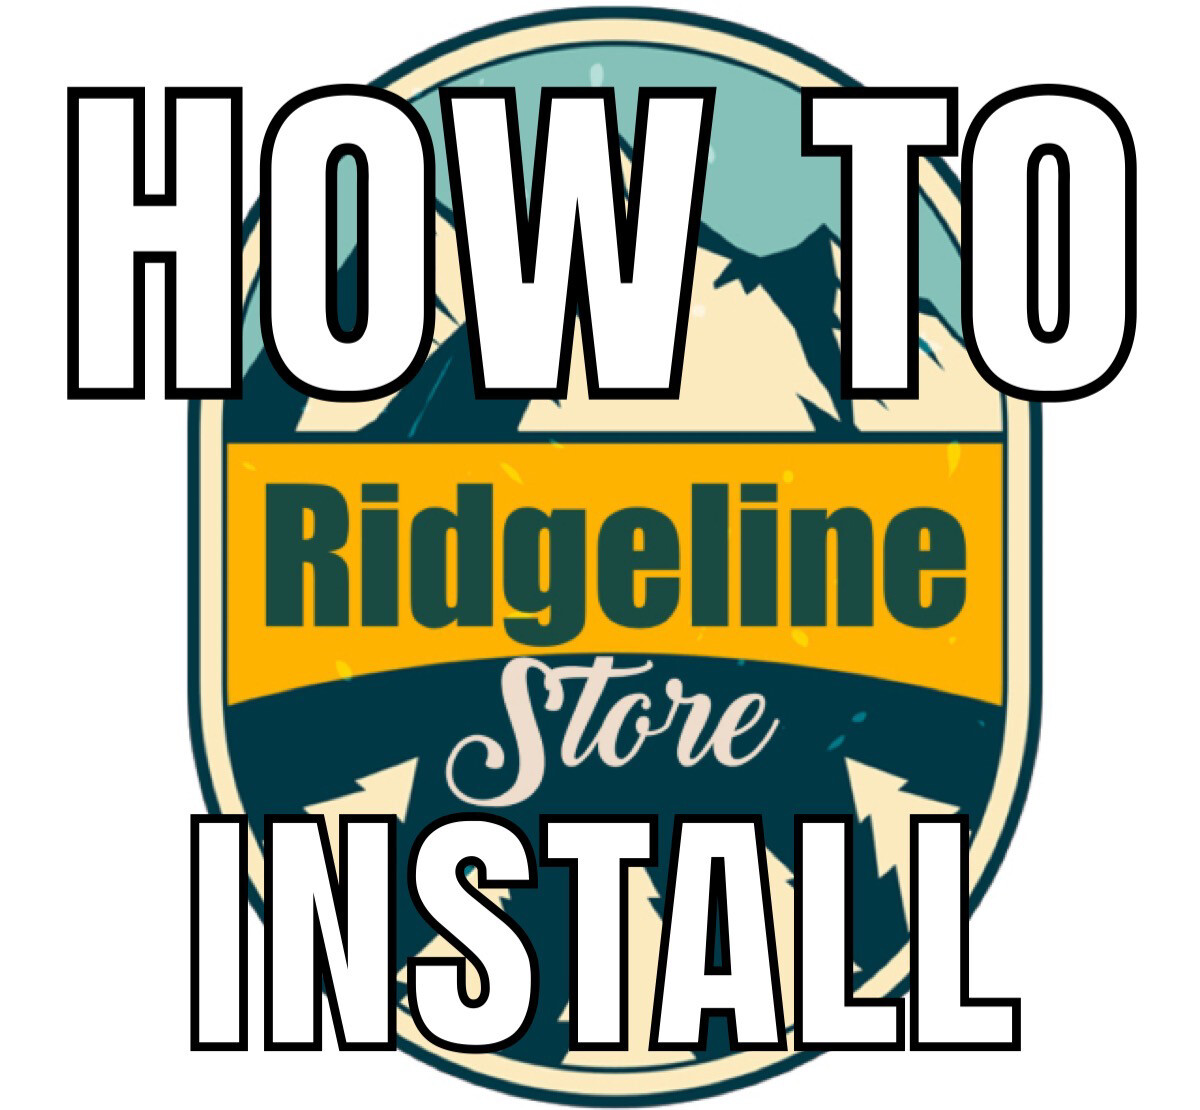 How To Install The Honda Ridgeline 2016-2020 Fender Flares